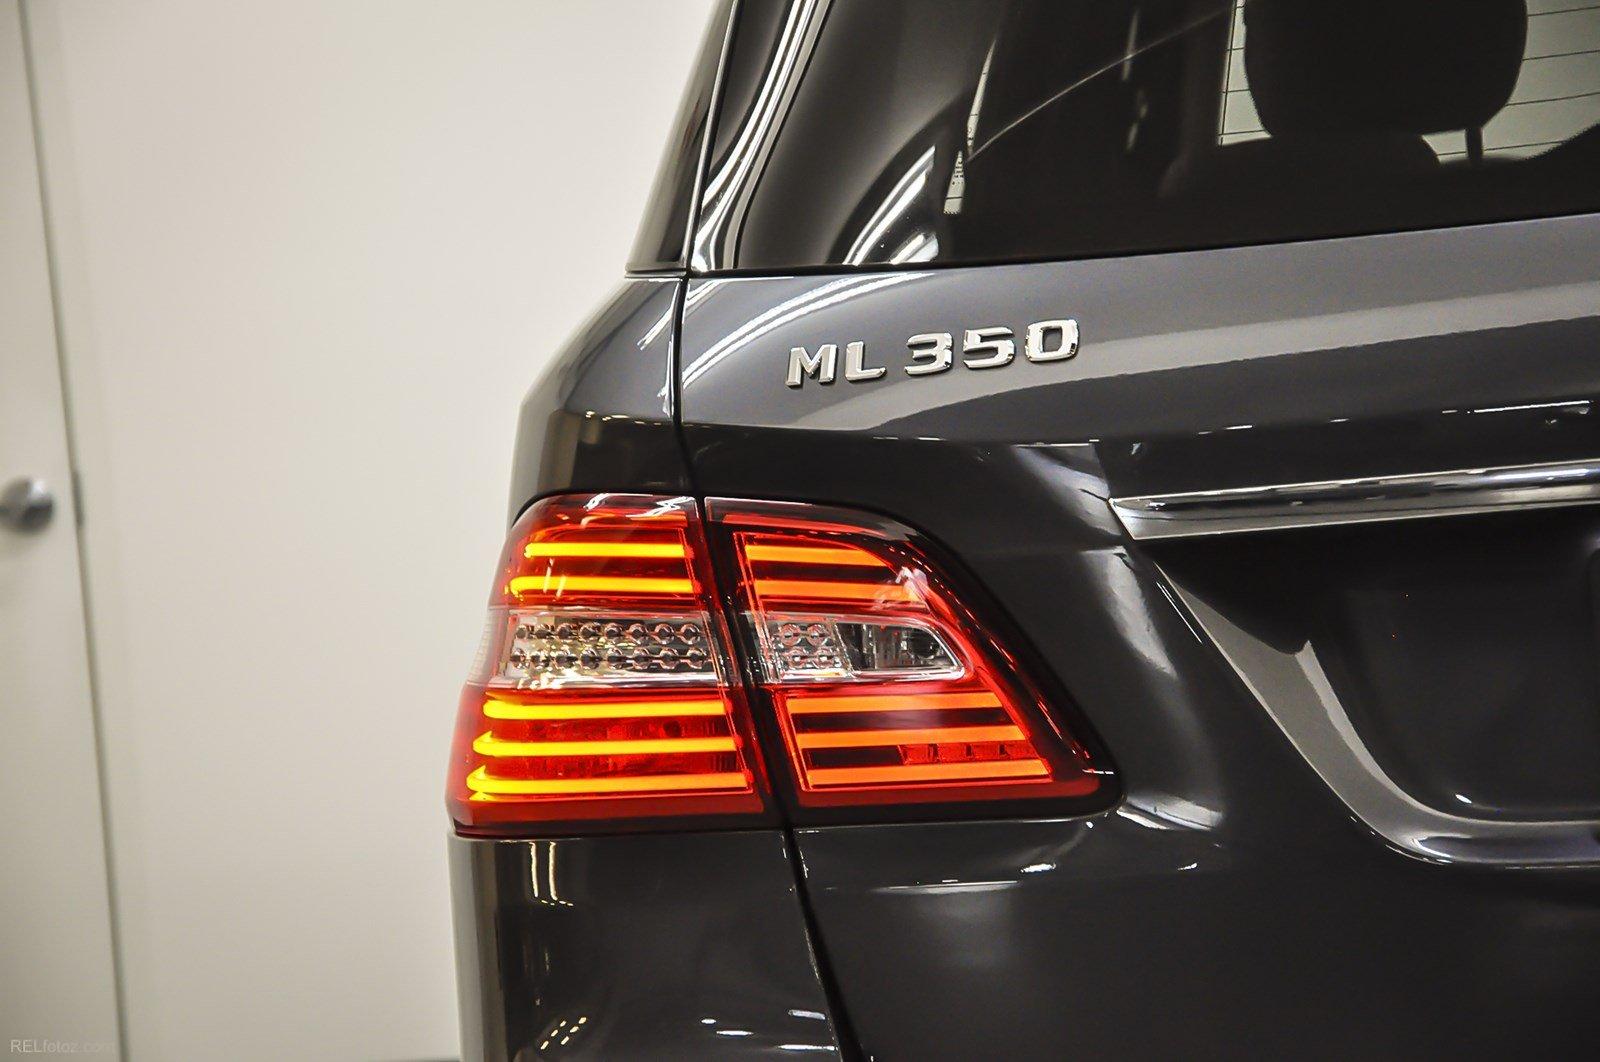 Used 2015 Mercedes-Benz M-Class ML 350 for sale Sold at Gravity Autos Marietta in Marietta GA 30060 6